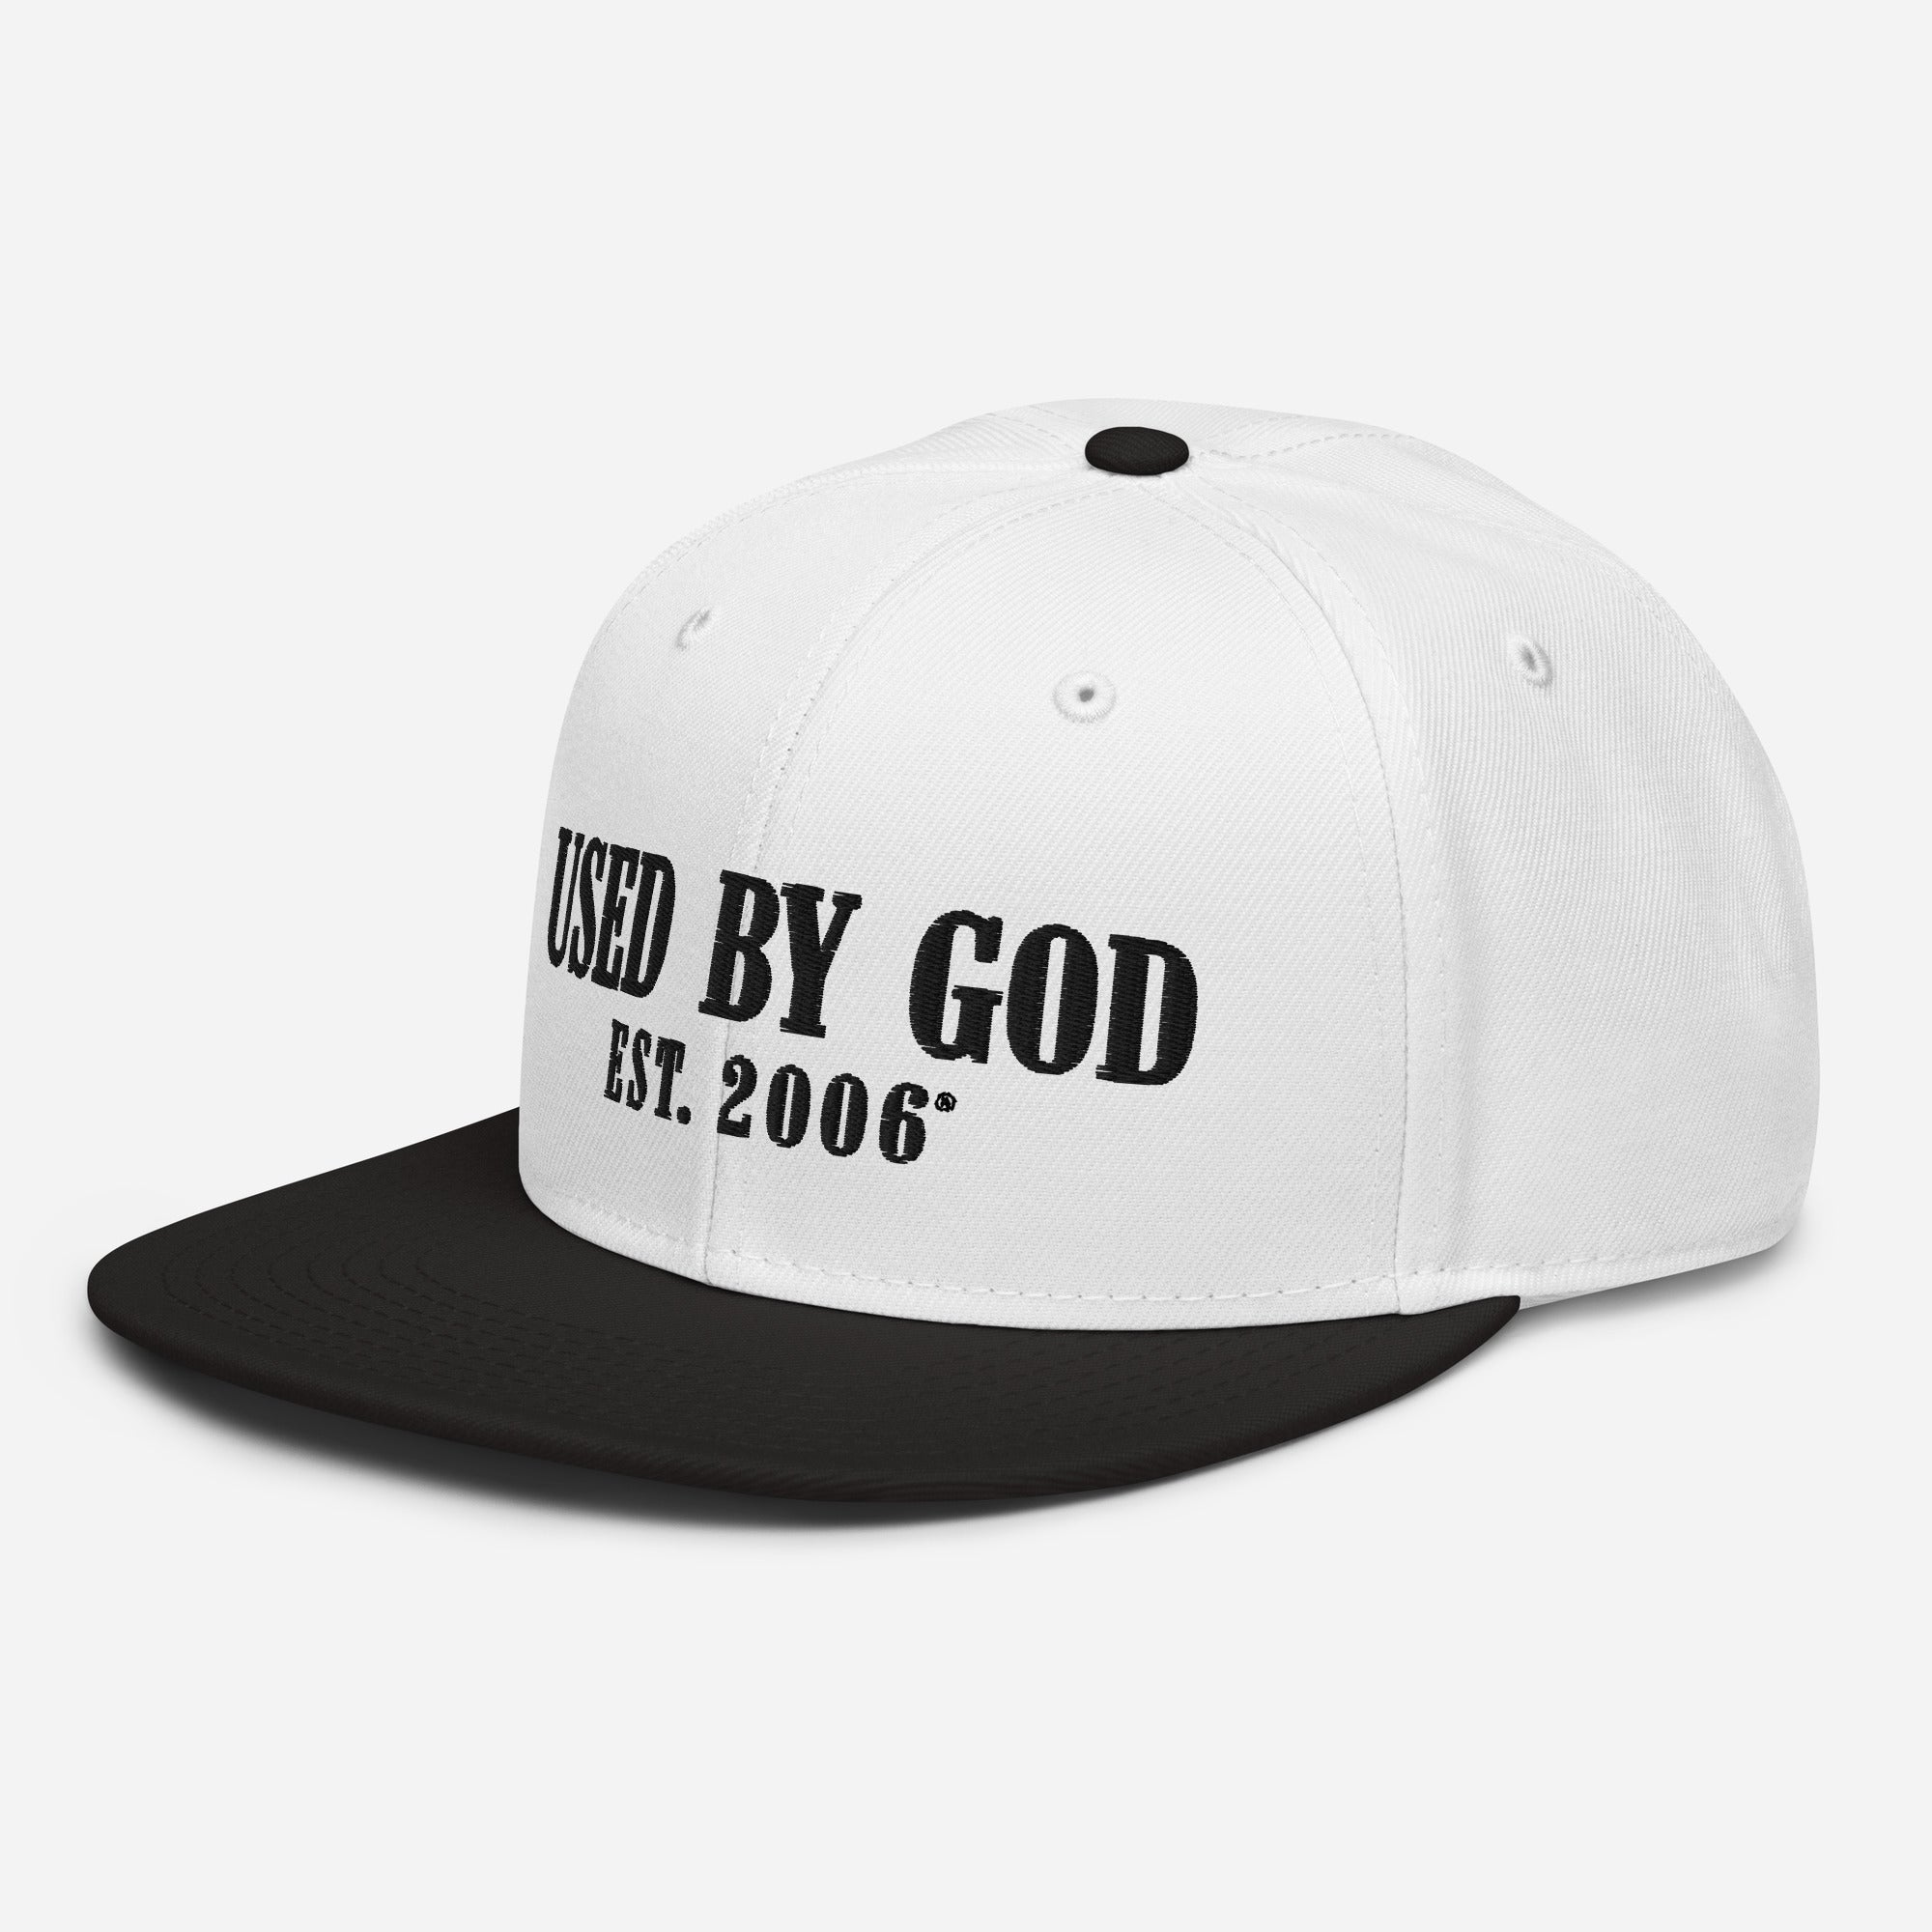 Used By God Est. 2006 BW Snapback Hat